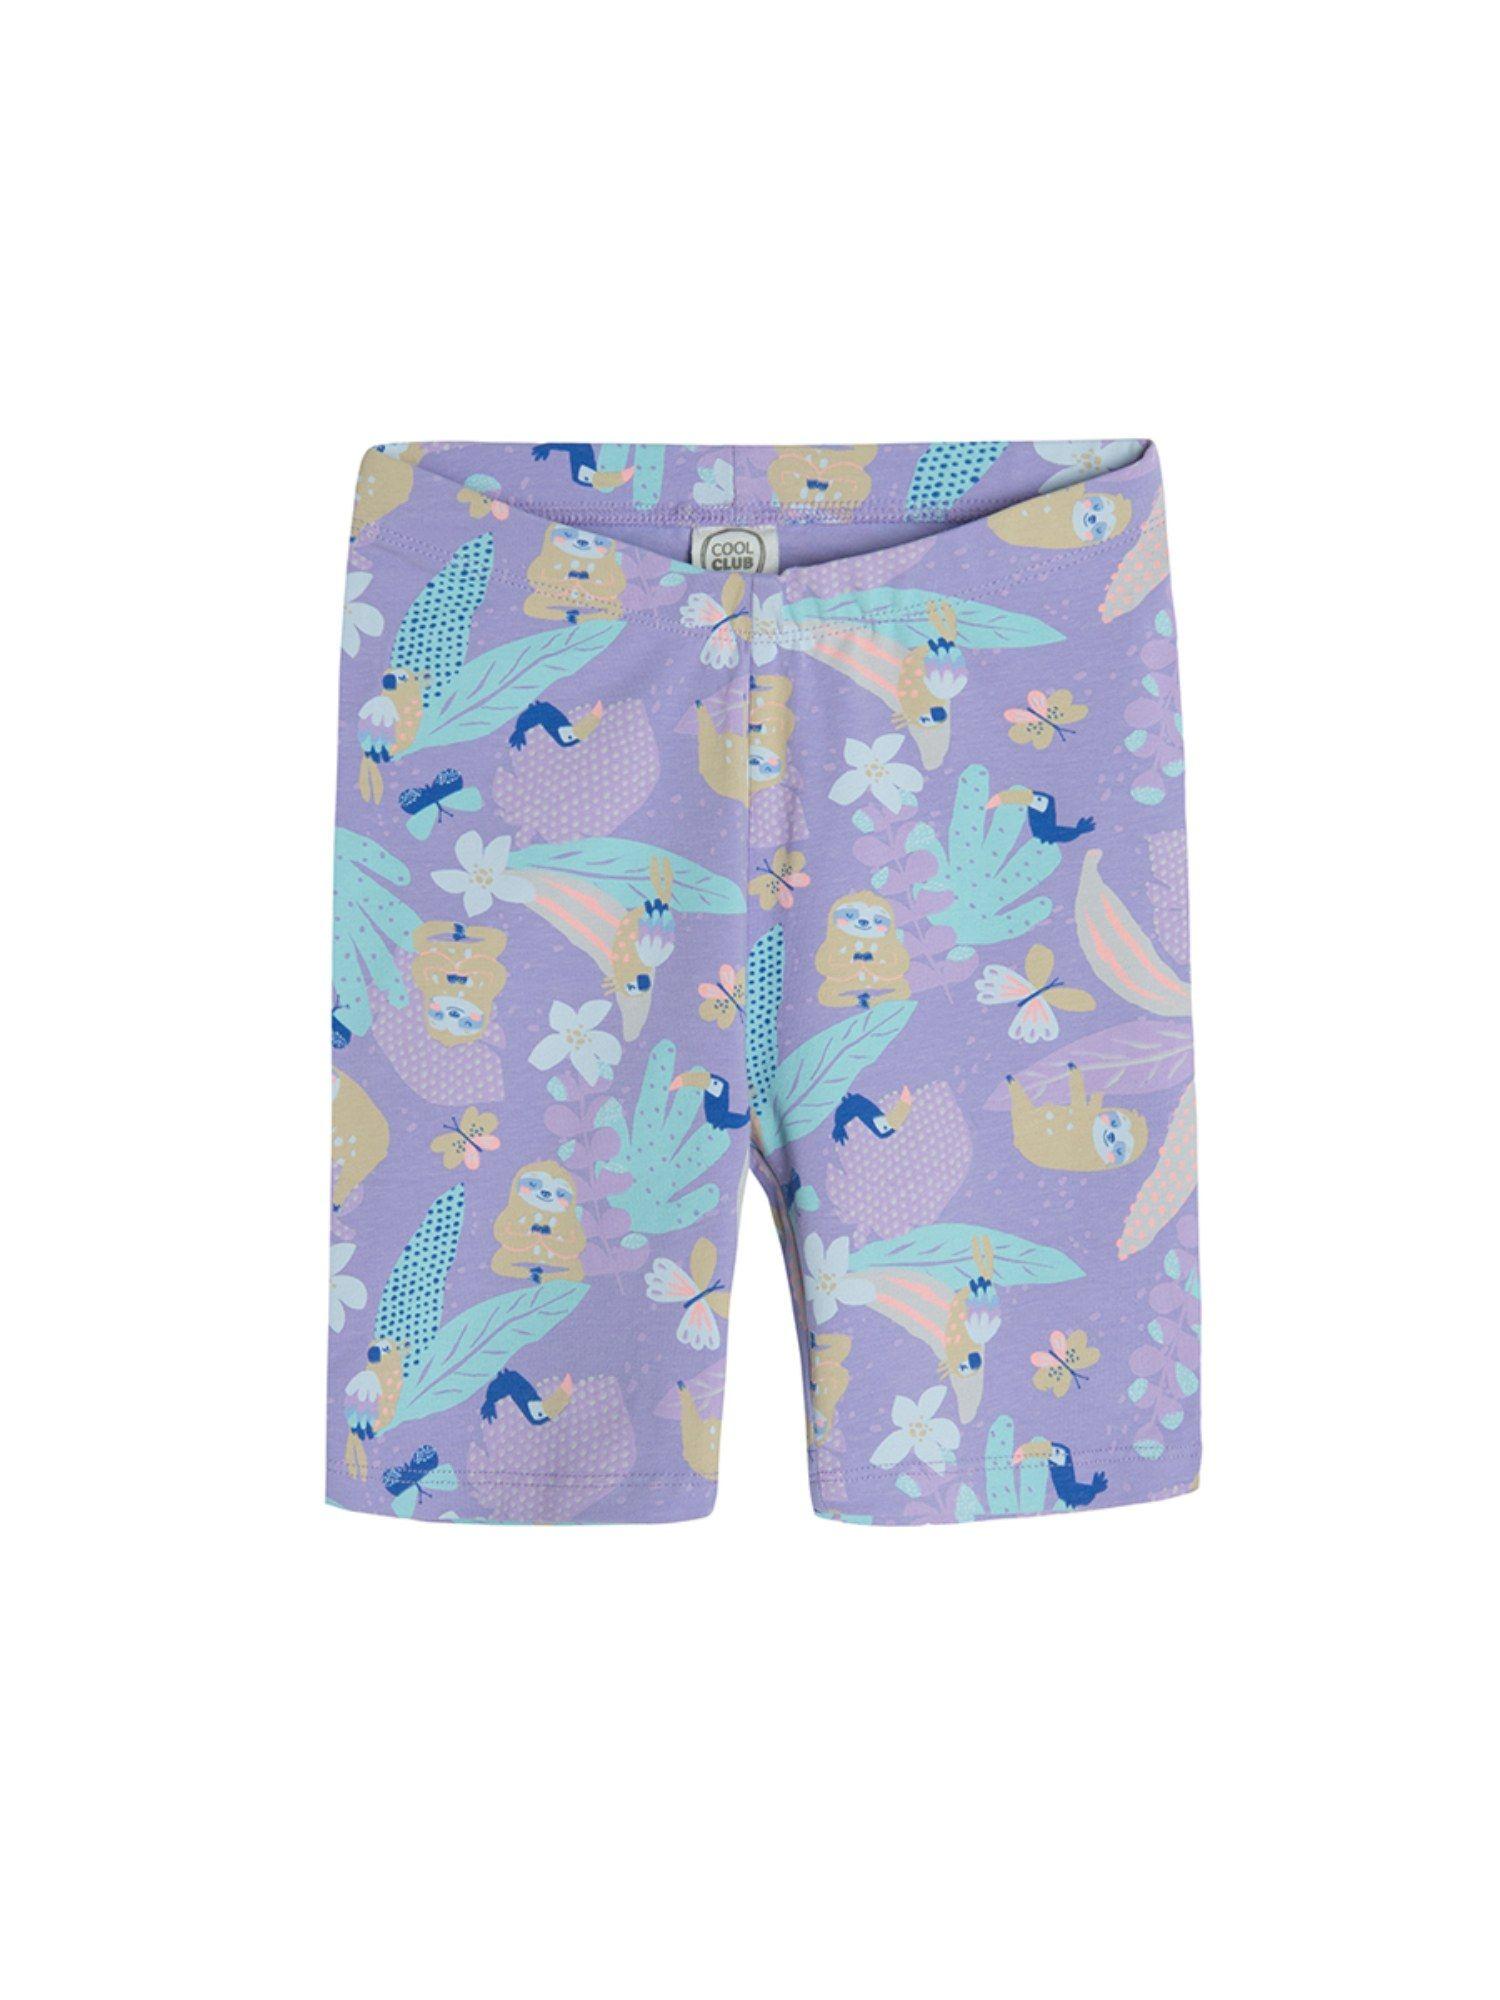 smyk-girls-lavender-printed-shorts